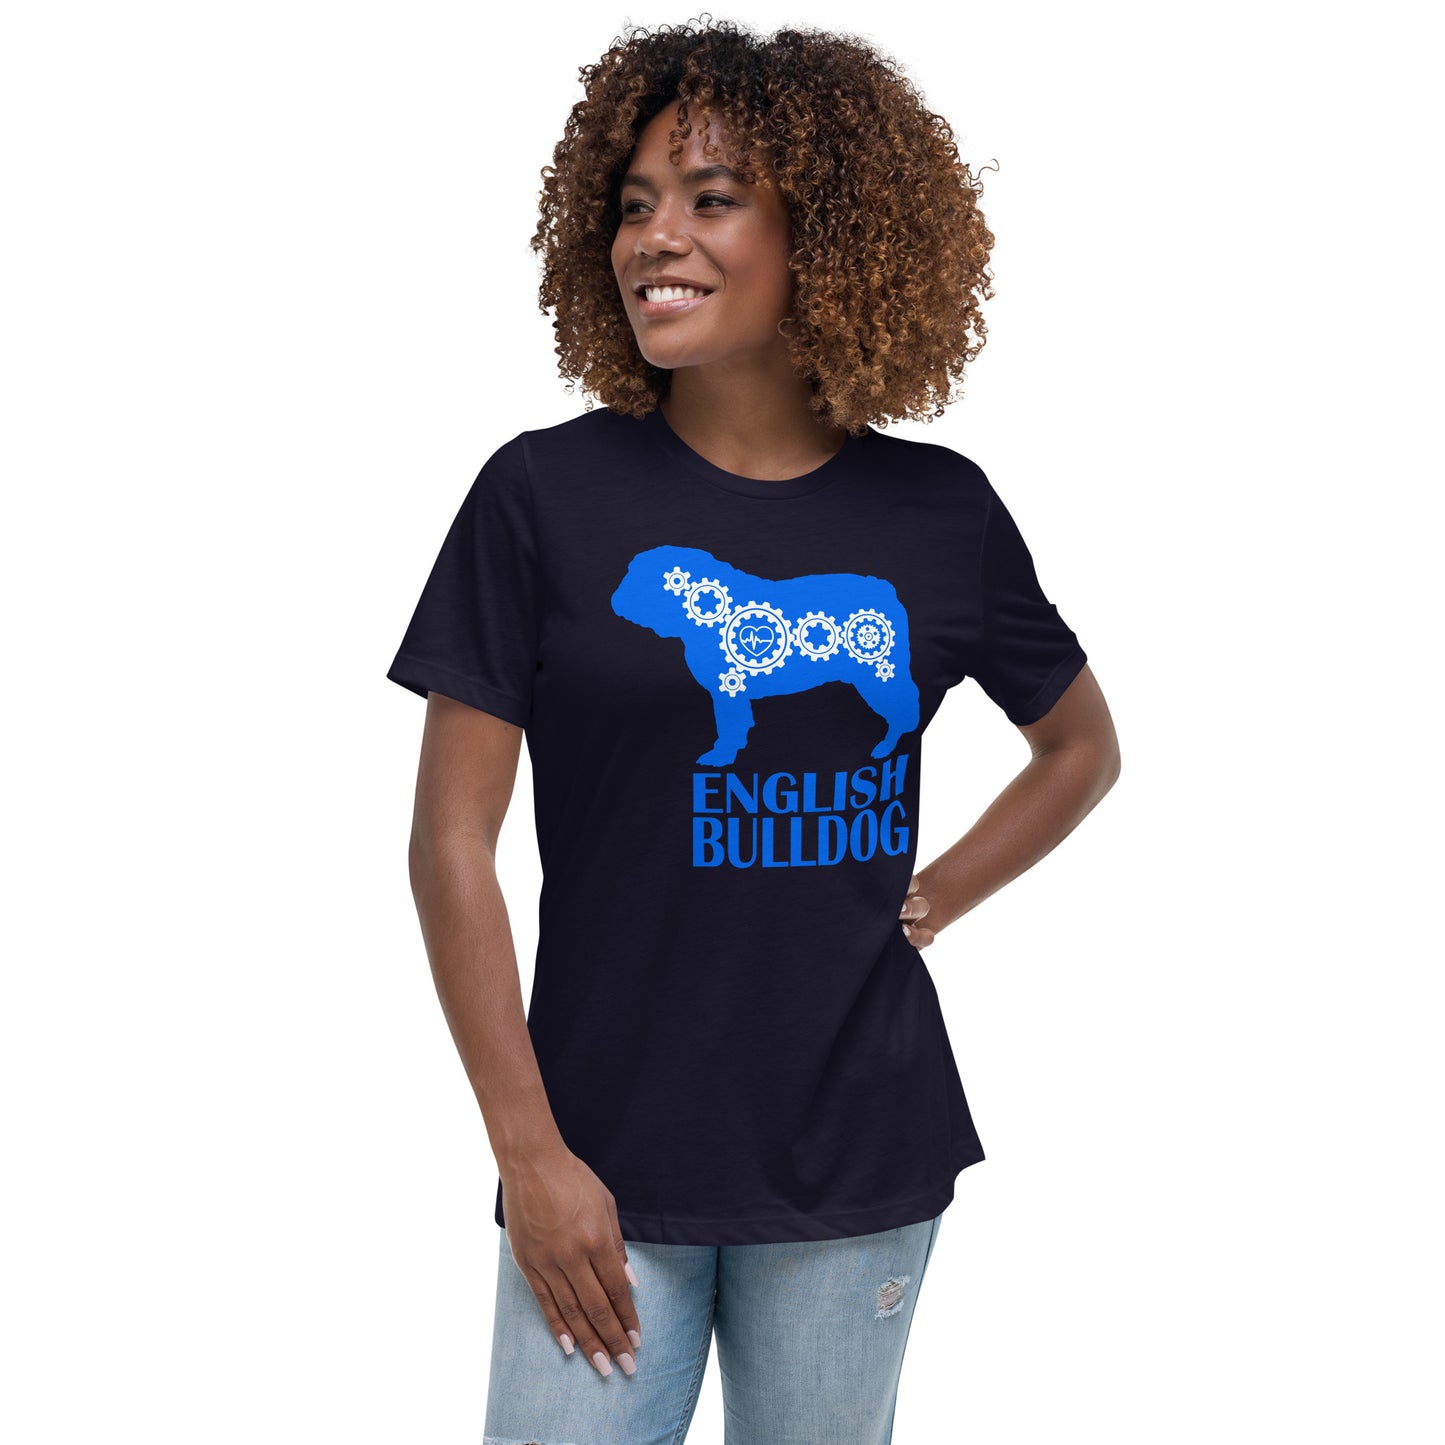 English Bulldog Bionic women’s navy t-shirt by Dog Artistry.